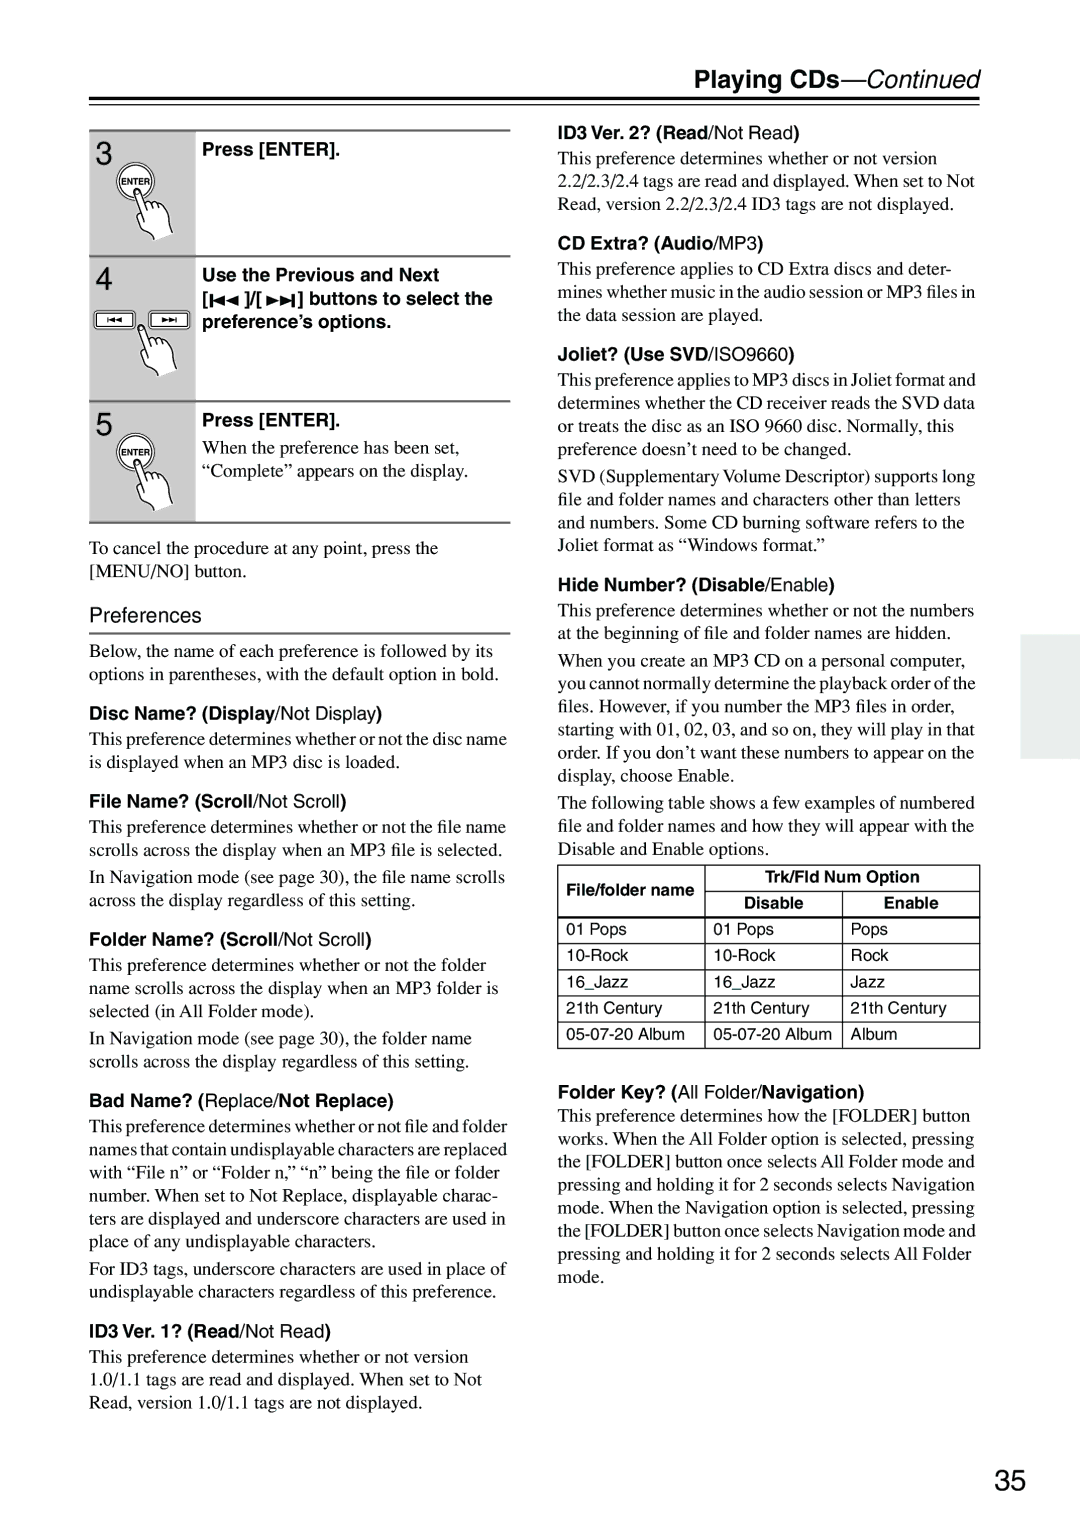 Onkyo CR-715DAB instruction manual Preferences 